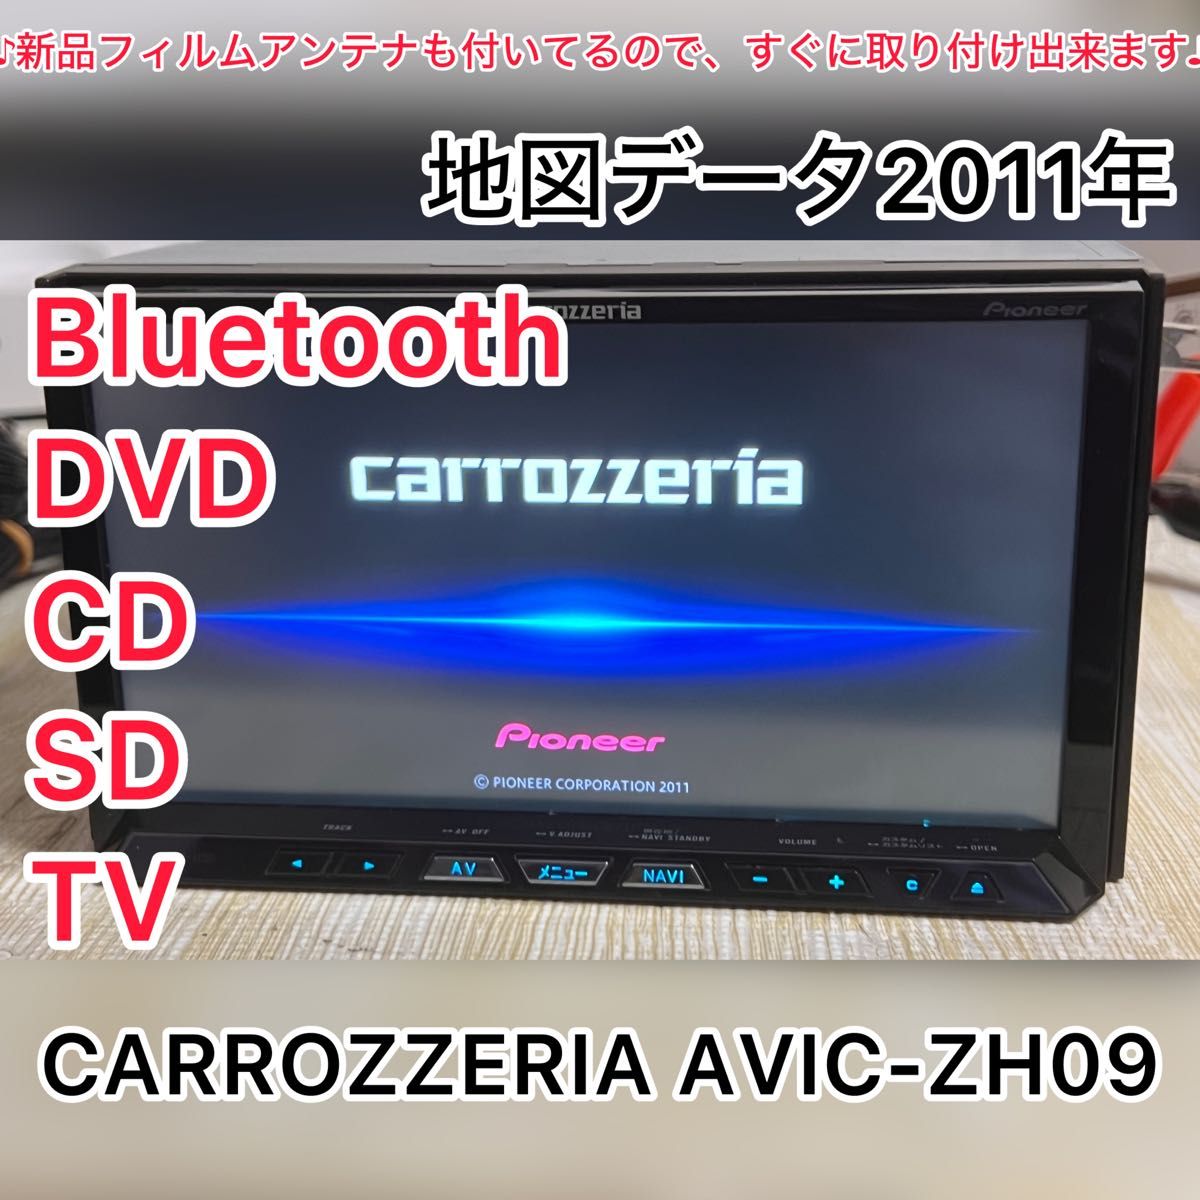 CARROZZERIA AVIC-ZH09zz  Bluetooth SD